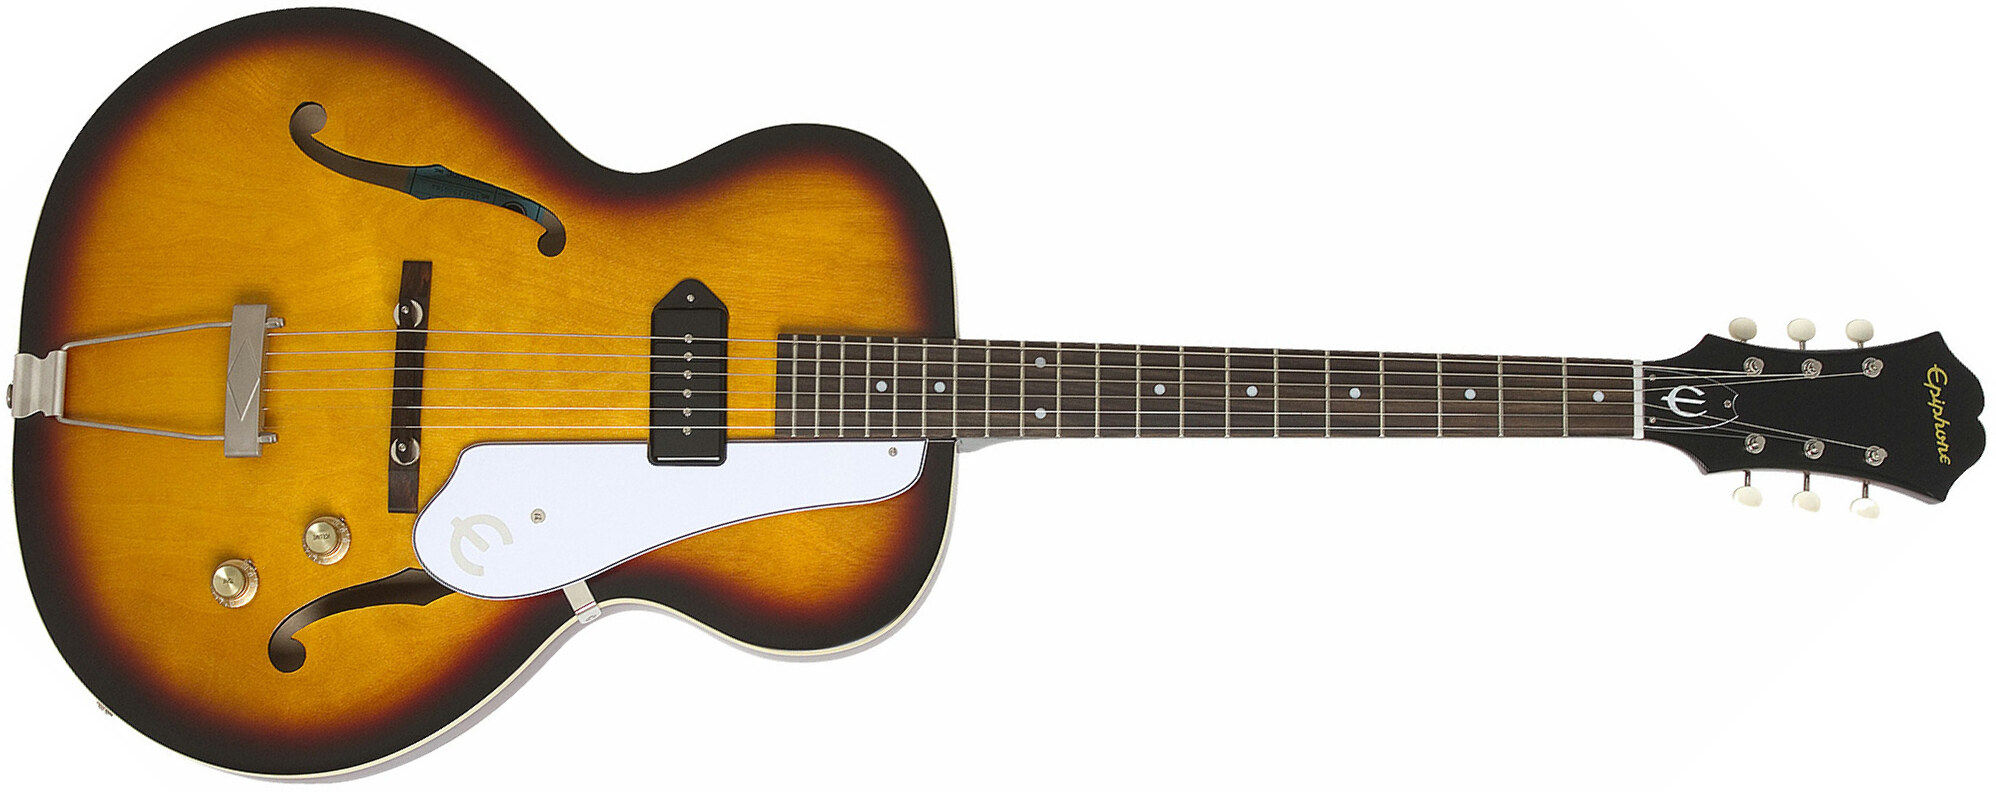 Epiphone Inspired By 1966 Century 2016 - Aged Gloss Vintage Sunburst - Semi hollow elektriche gitaar - Main picture